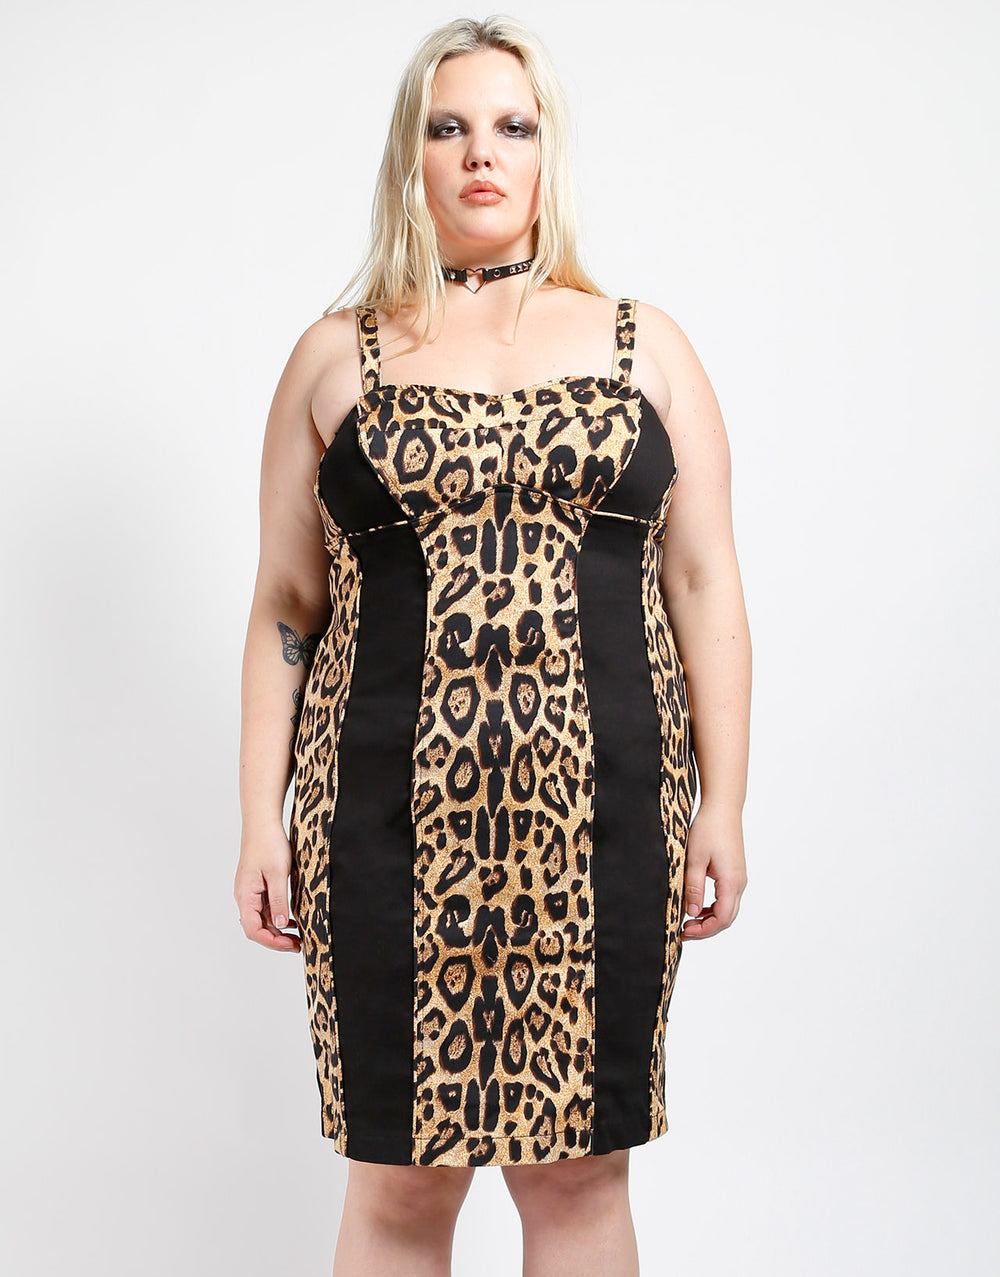 Darlene - Cheetah Print Dress - Coco-Lux Couture